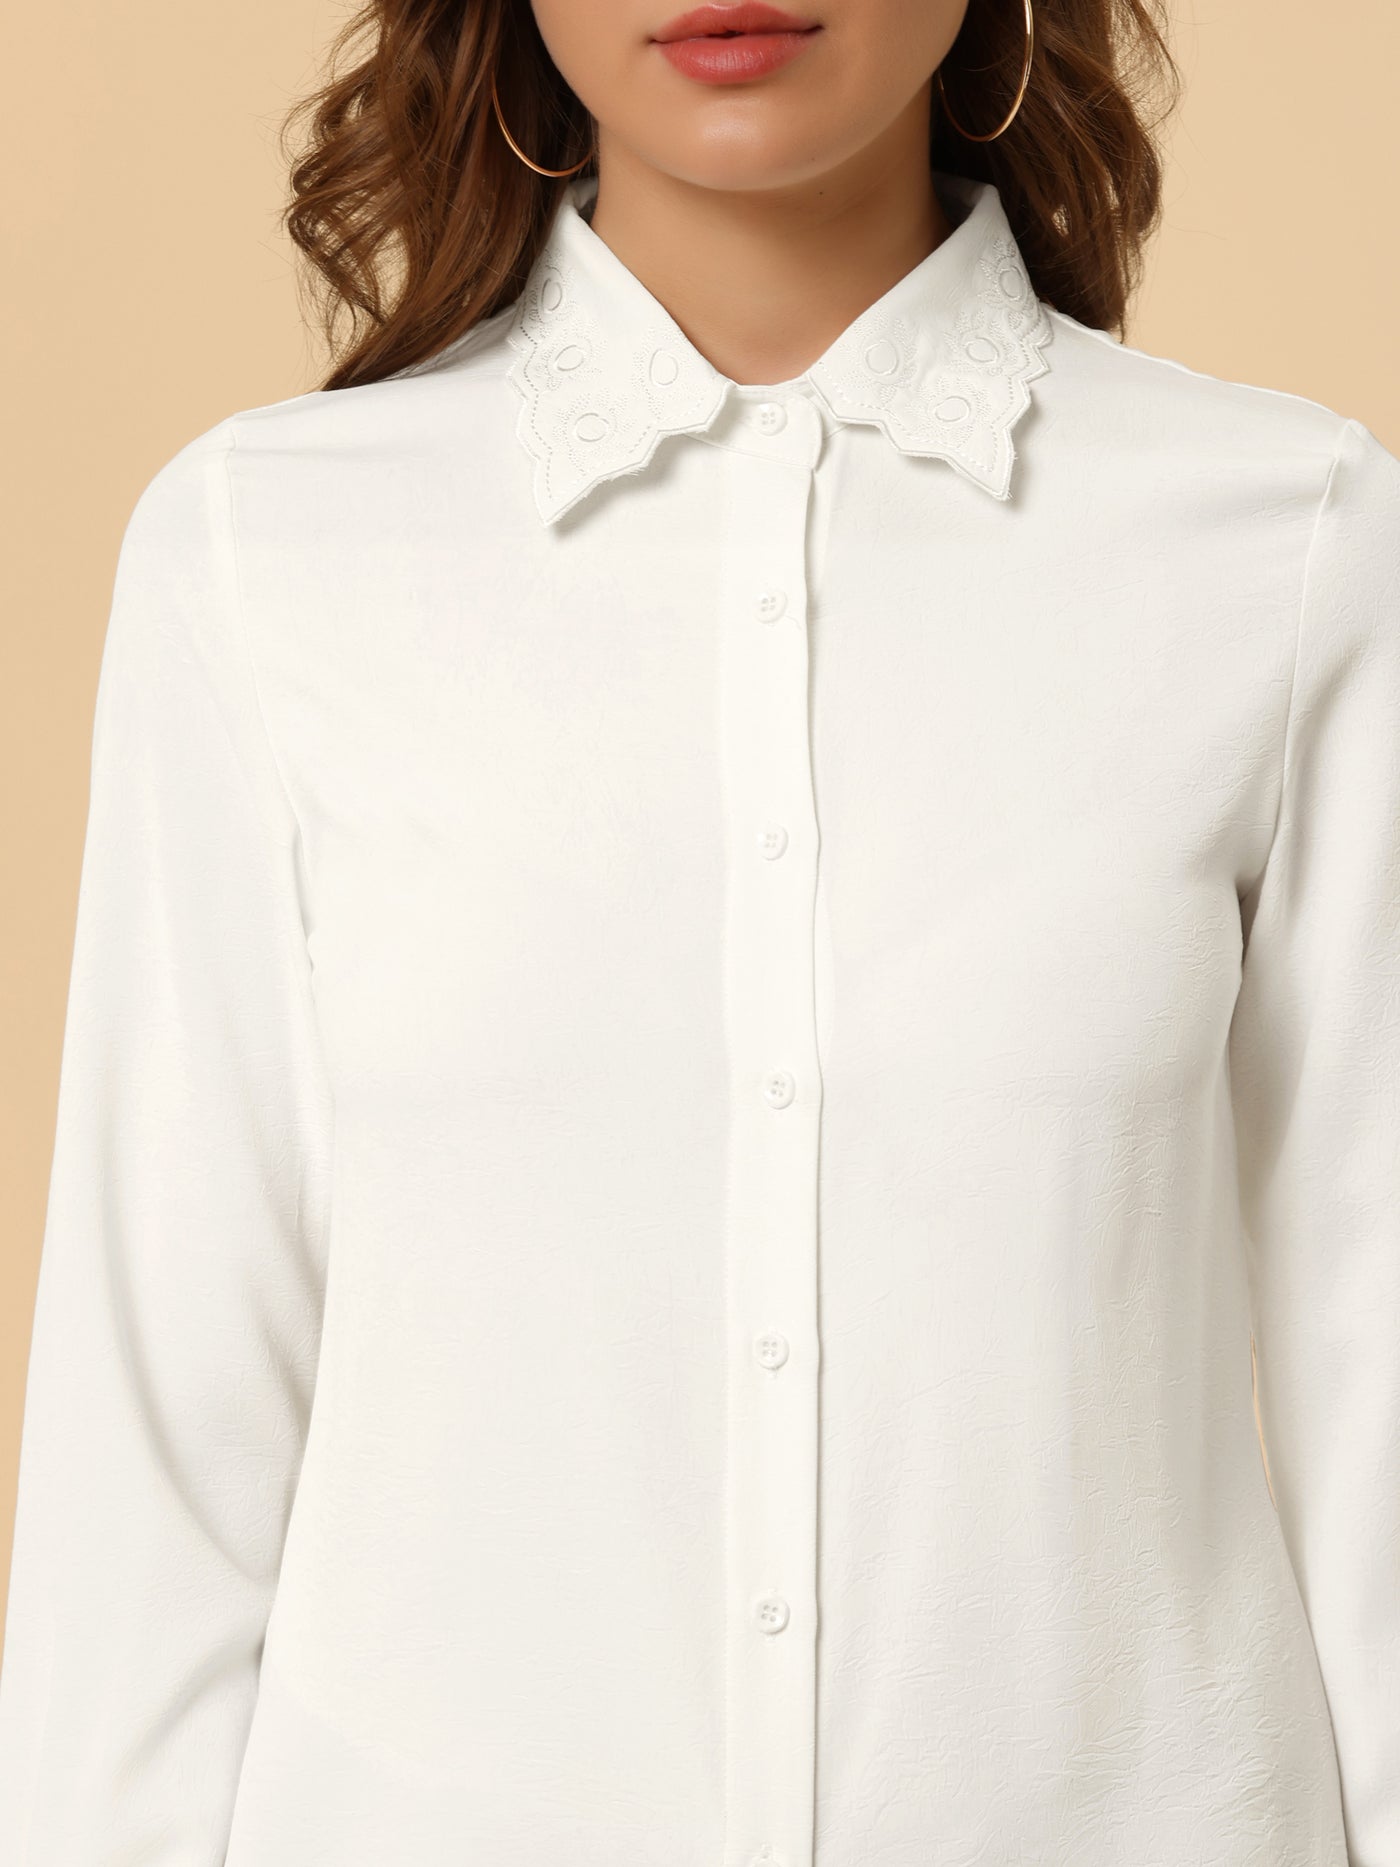 Allegra K Embroidered Collar Long Sleeve Office Button Up Shirt Top